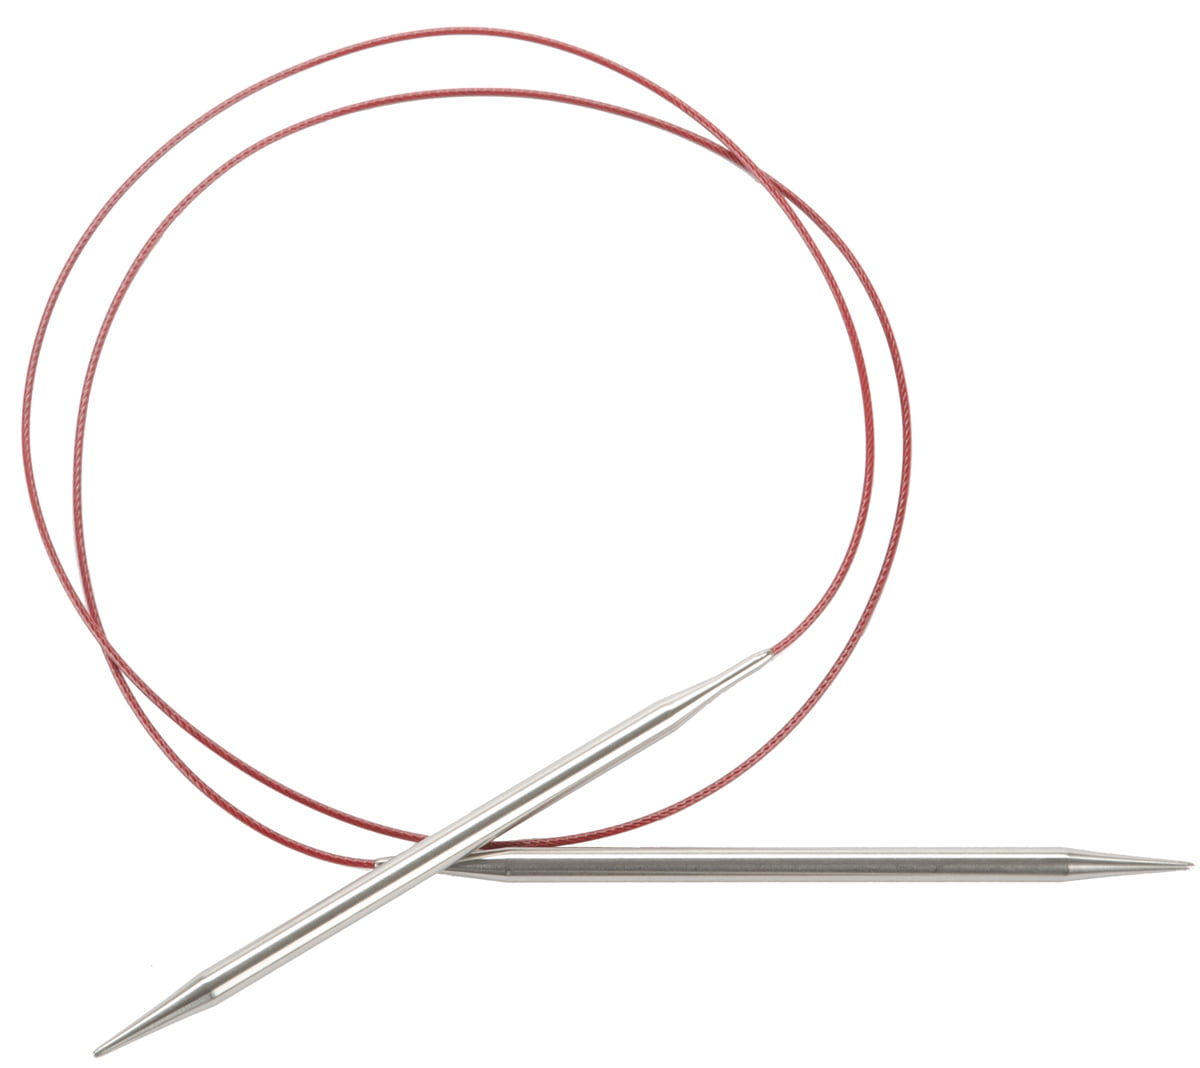 Chiagoo, circular needles red lace 80 cm - woolinspires